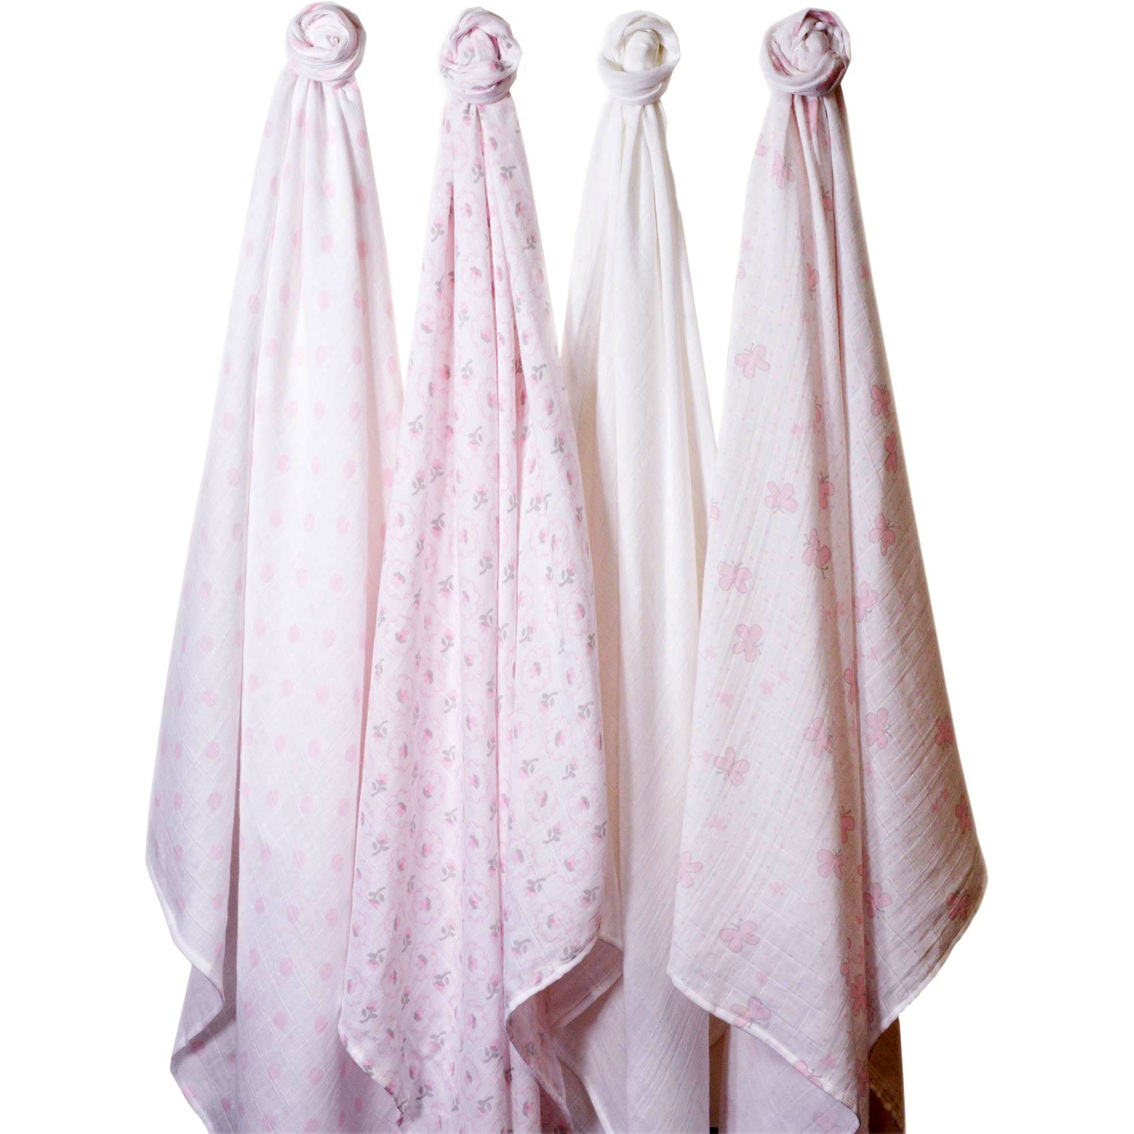 swaddledesigns cotton muslin swaddle blankets